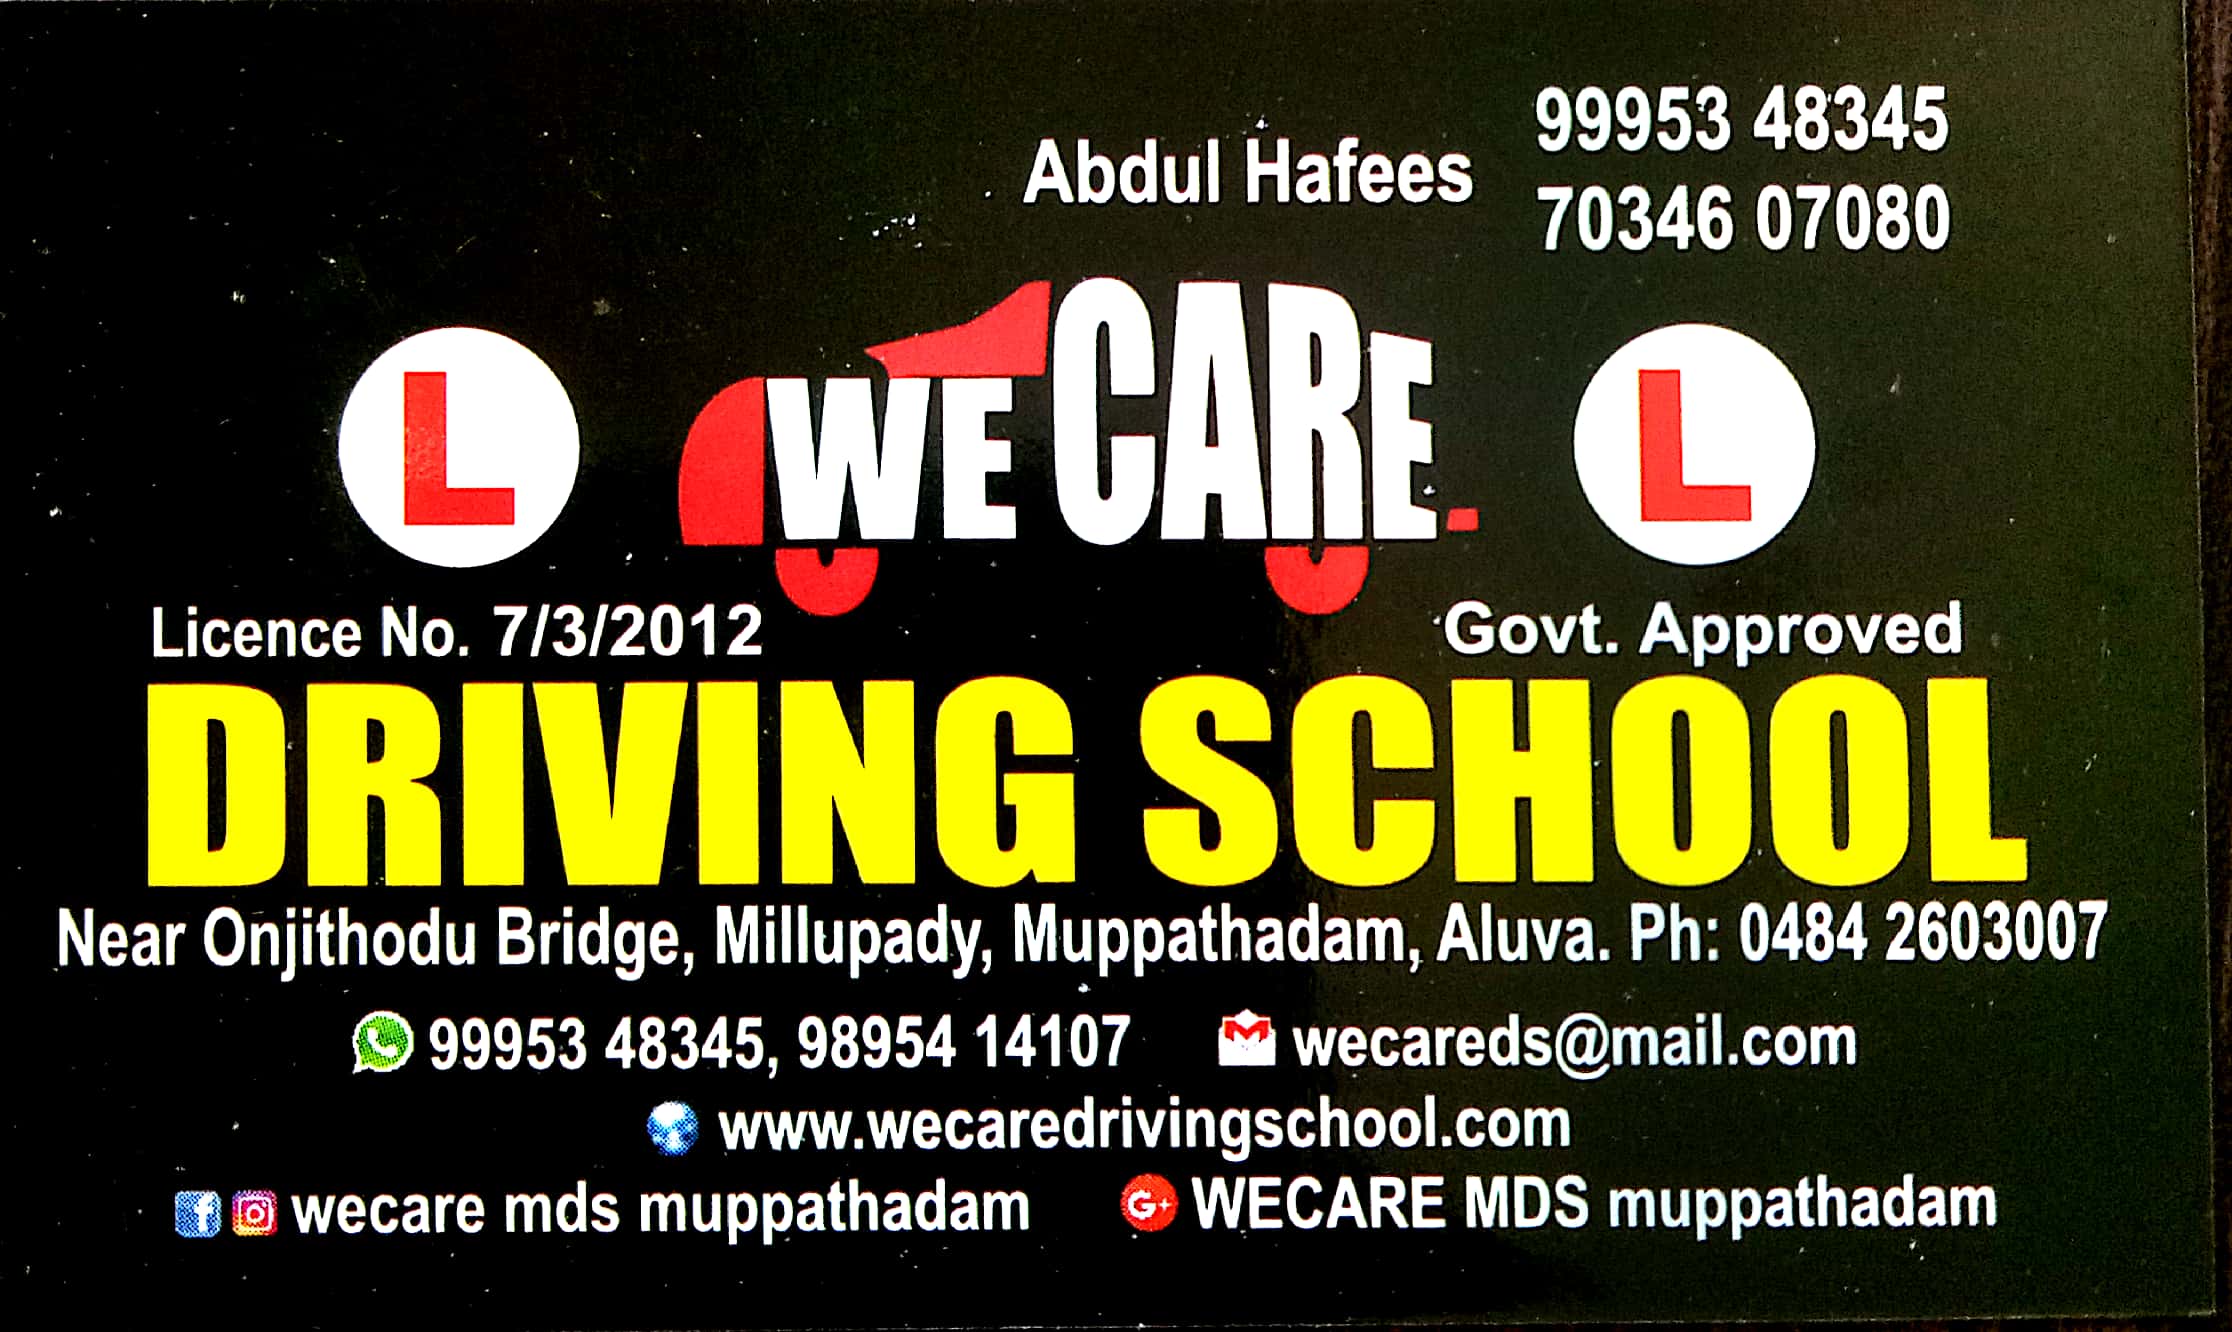 WE CARE DRIVING SCHOOL, DRIVING SCHOOL,  service in Aluva, Ernakulam